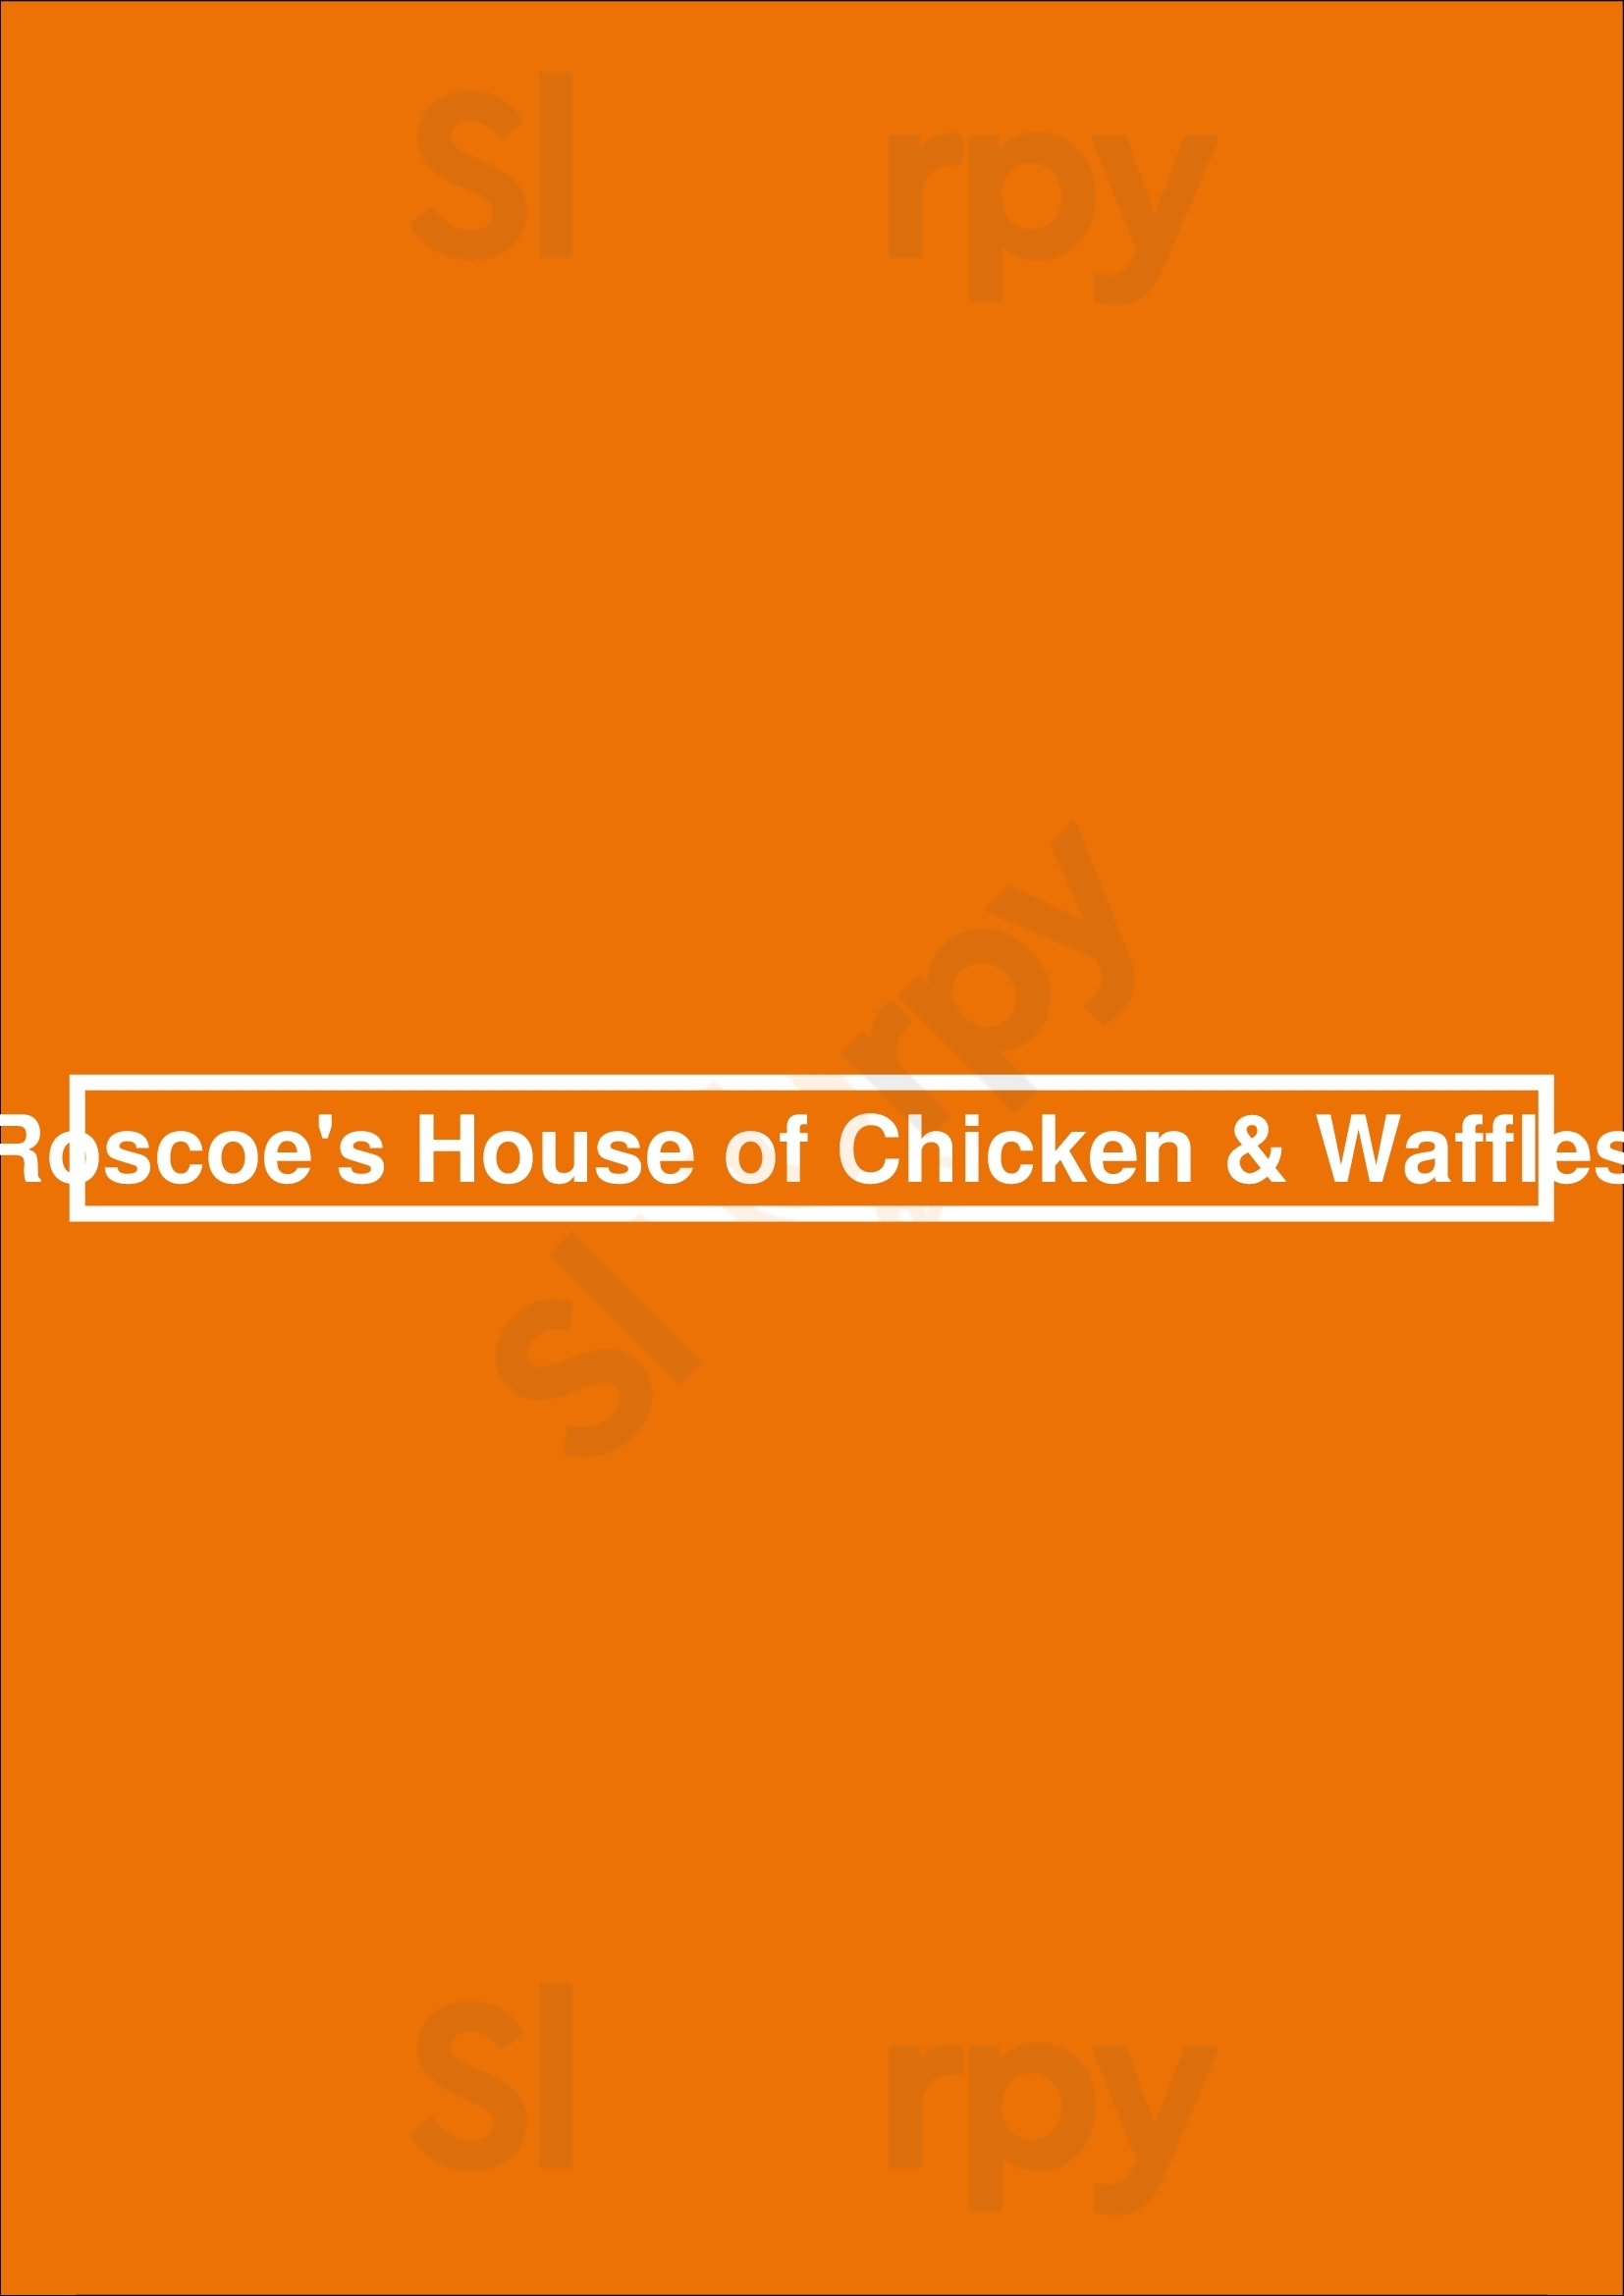 Roscoe's House Of Chicken & Waffles South La Los Angeles Menu - 1